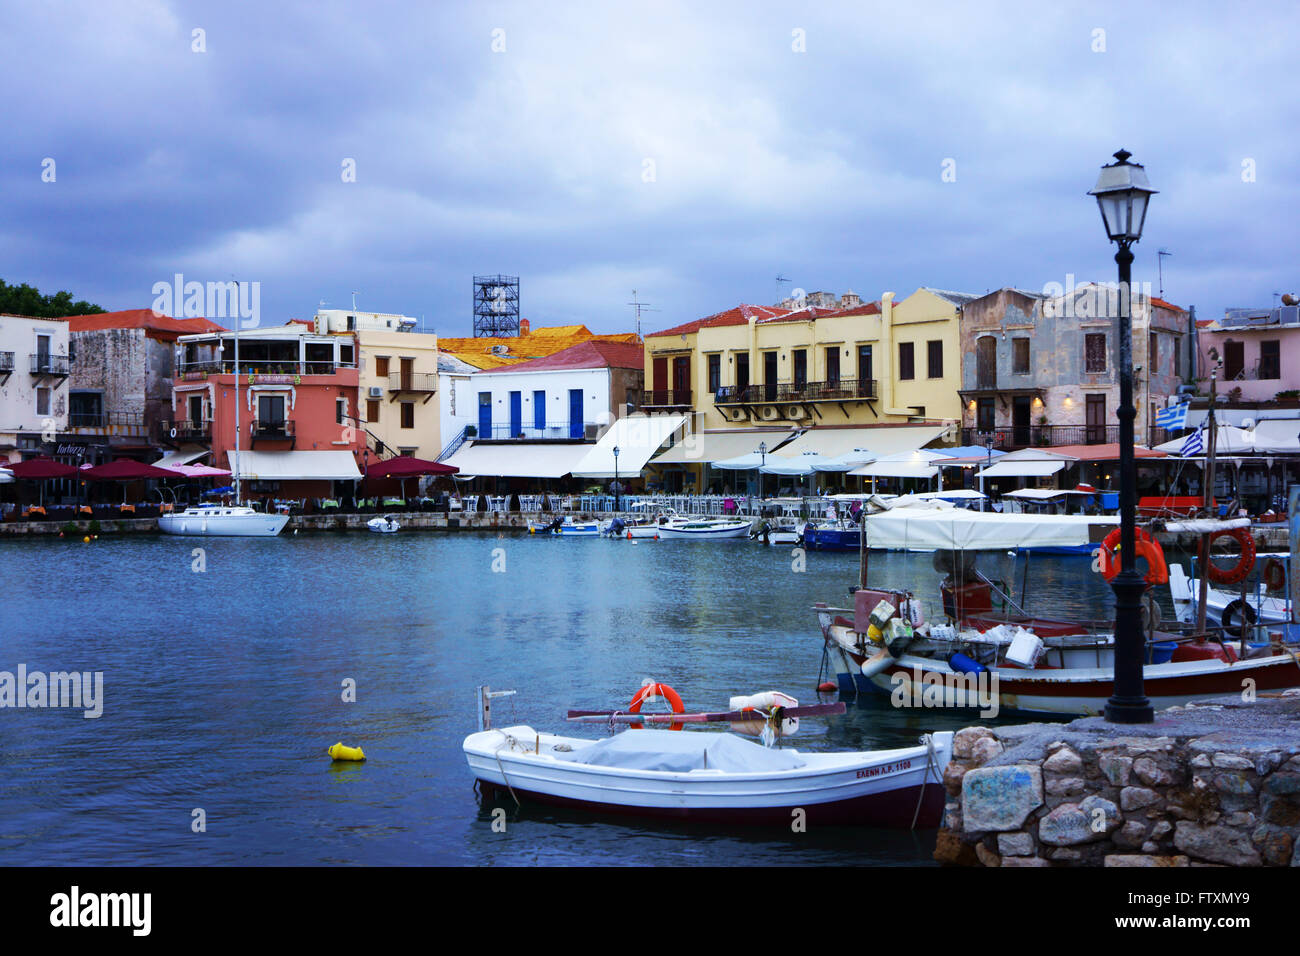 Harbor and restaurants along harbor in old town Rhetimno, island Crete, Greece Stock Photo